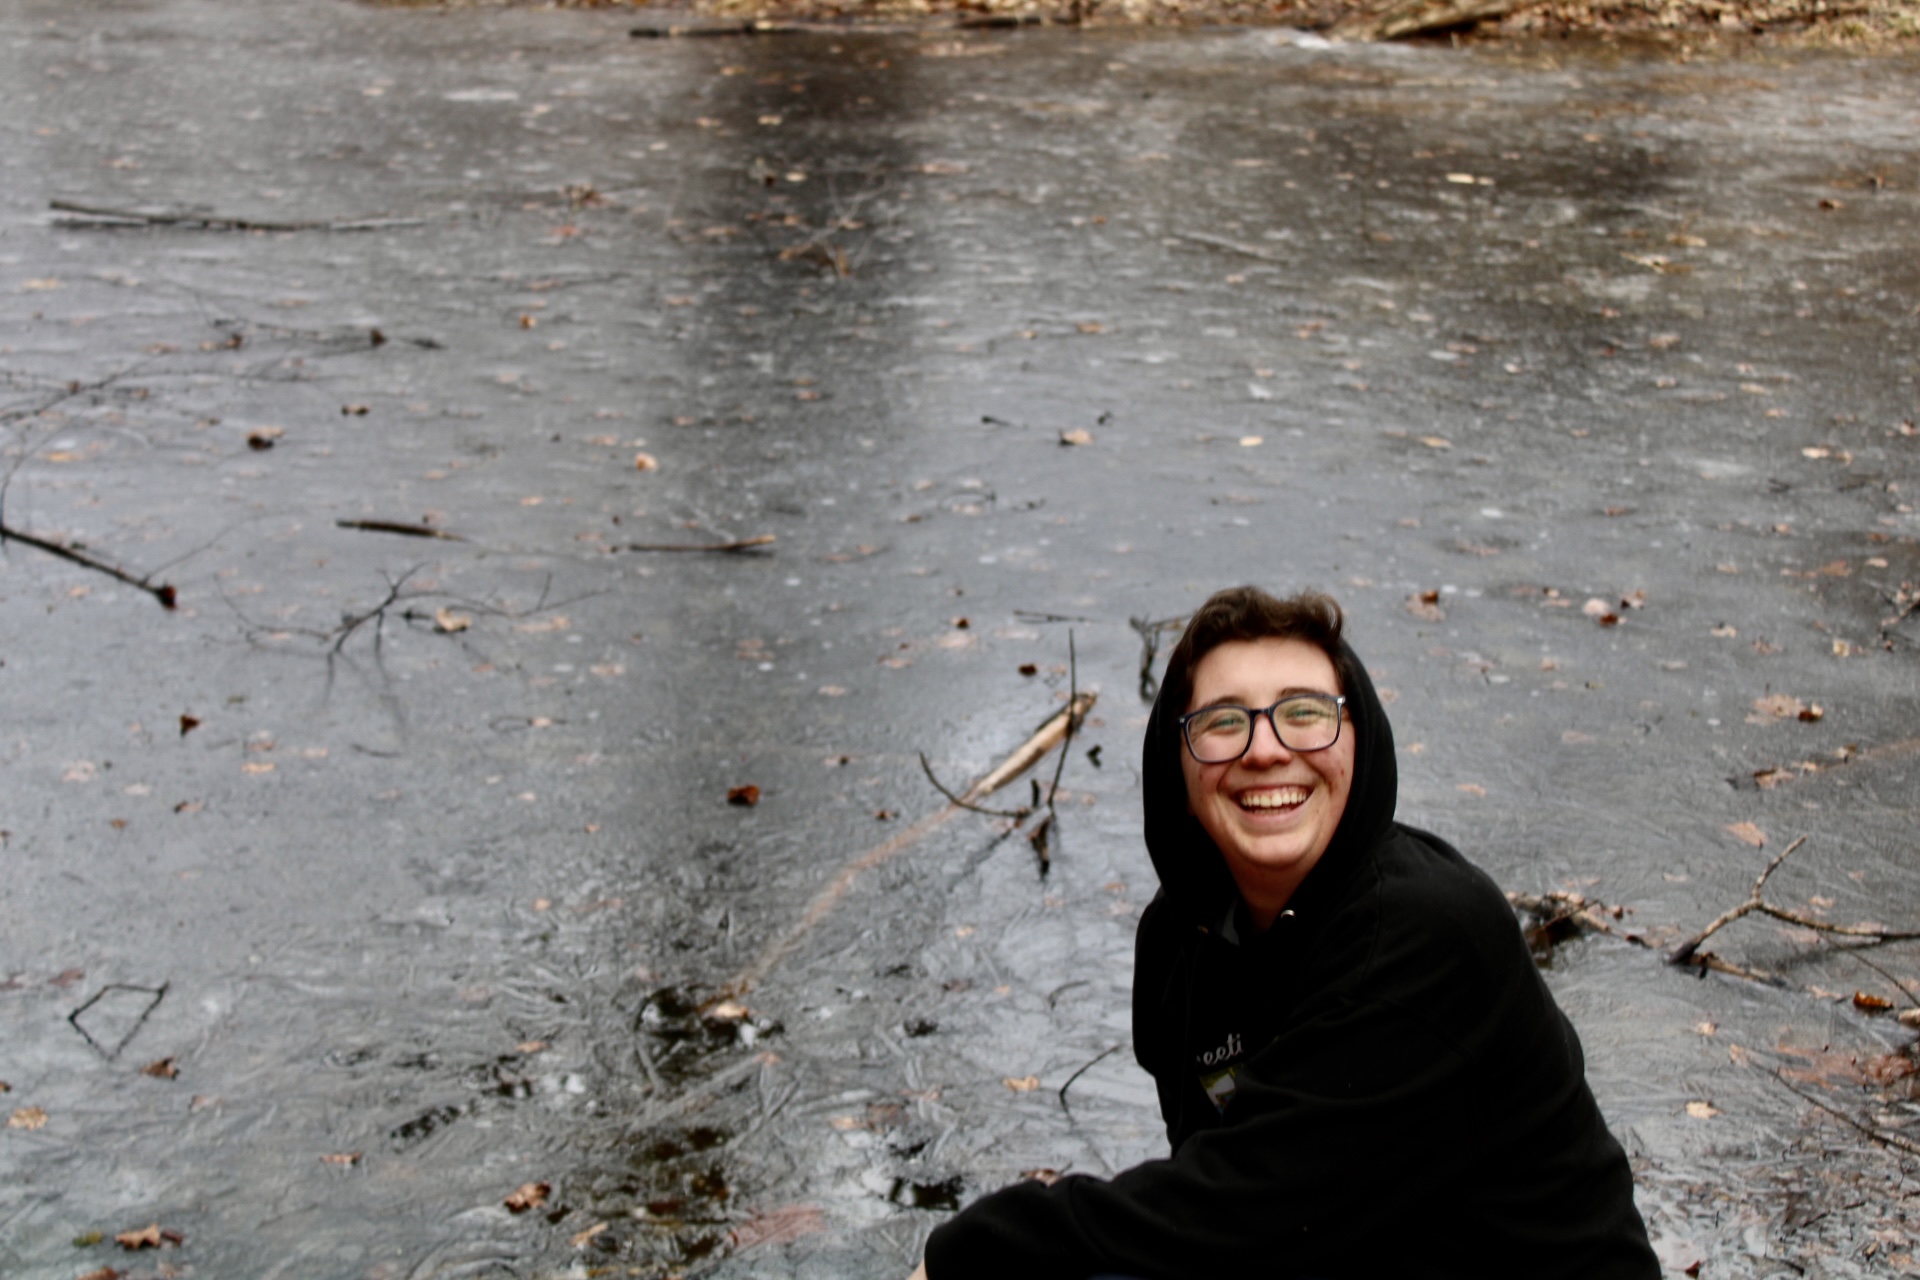 Photo: Micah Rensunberg by a frozen pond at the Woolman Hill Retreat Center.